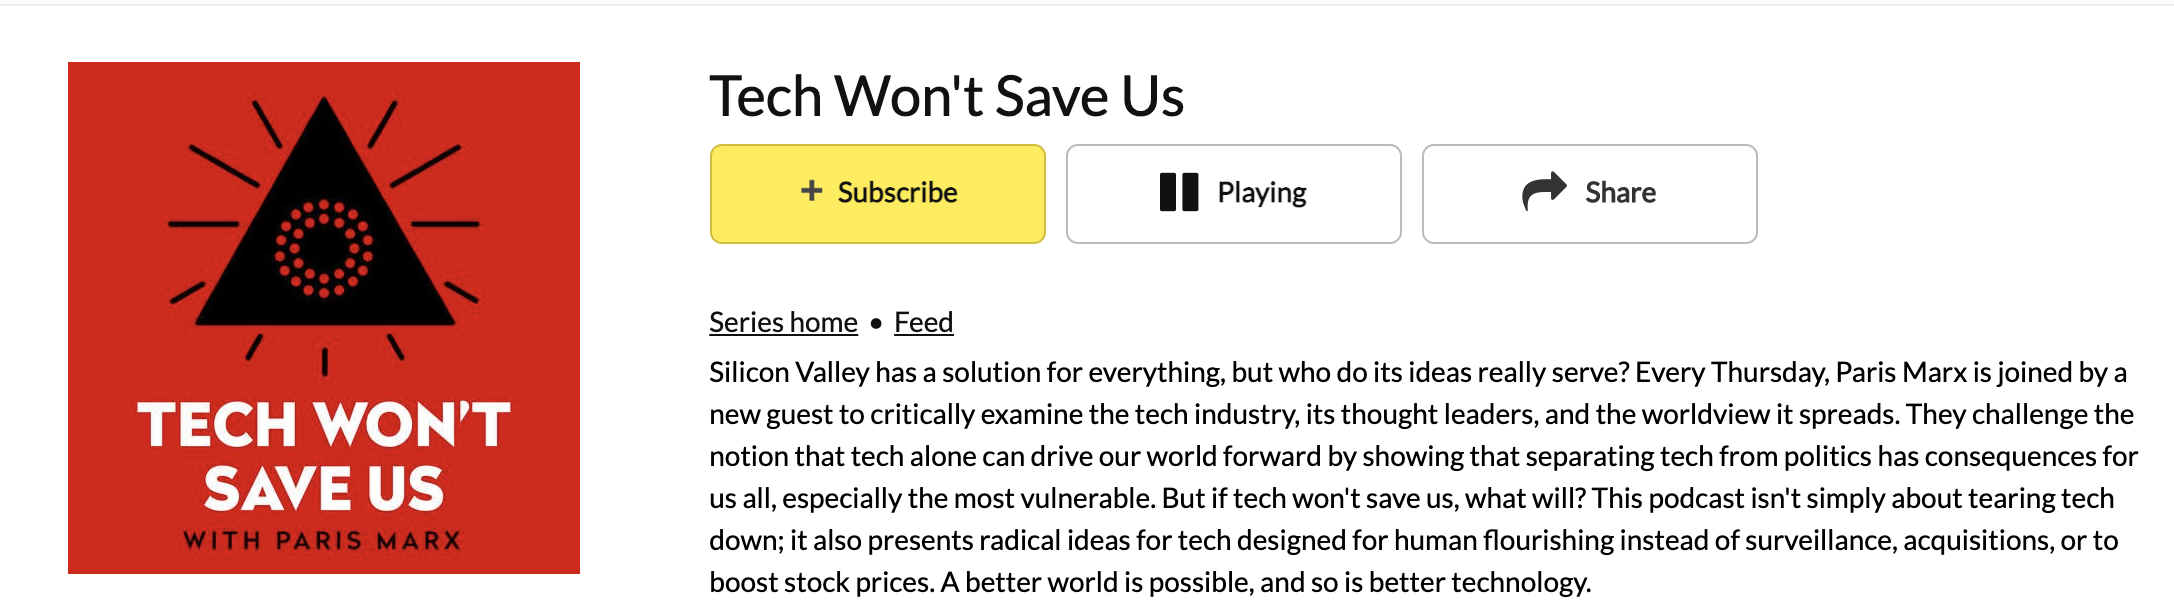 Tech Wont Save Us